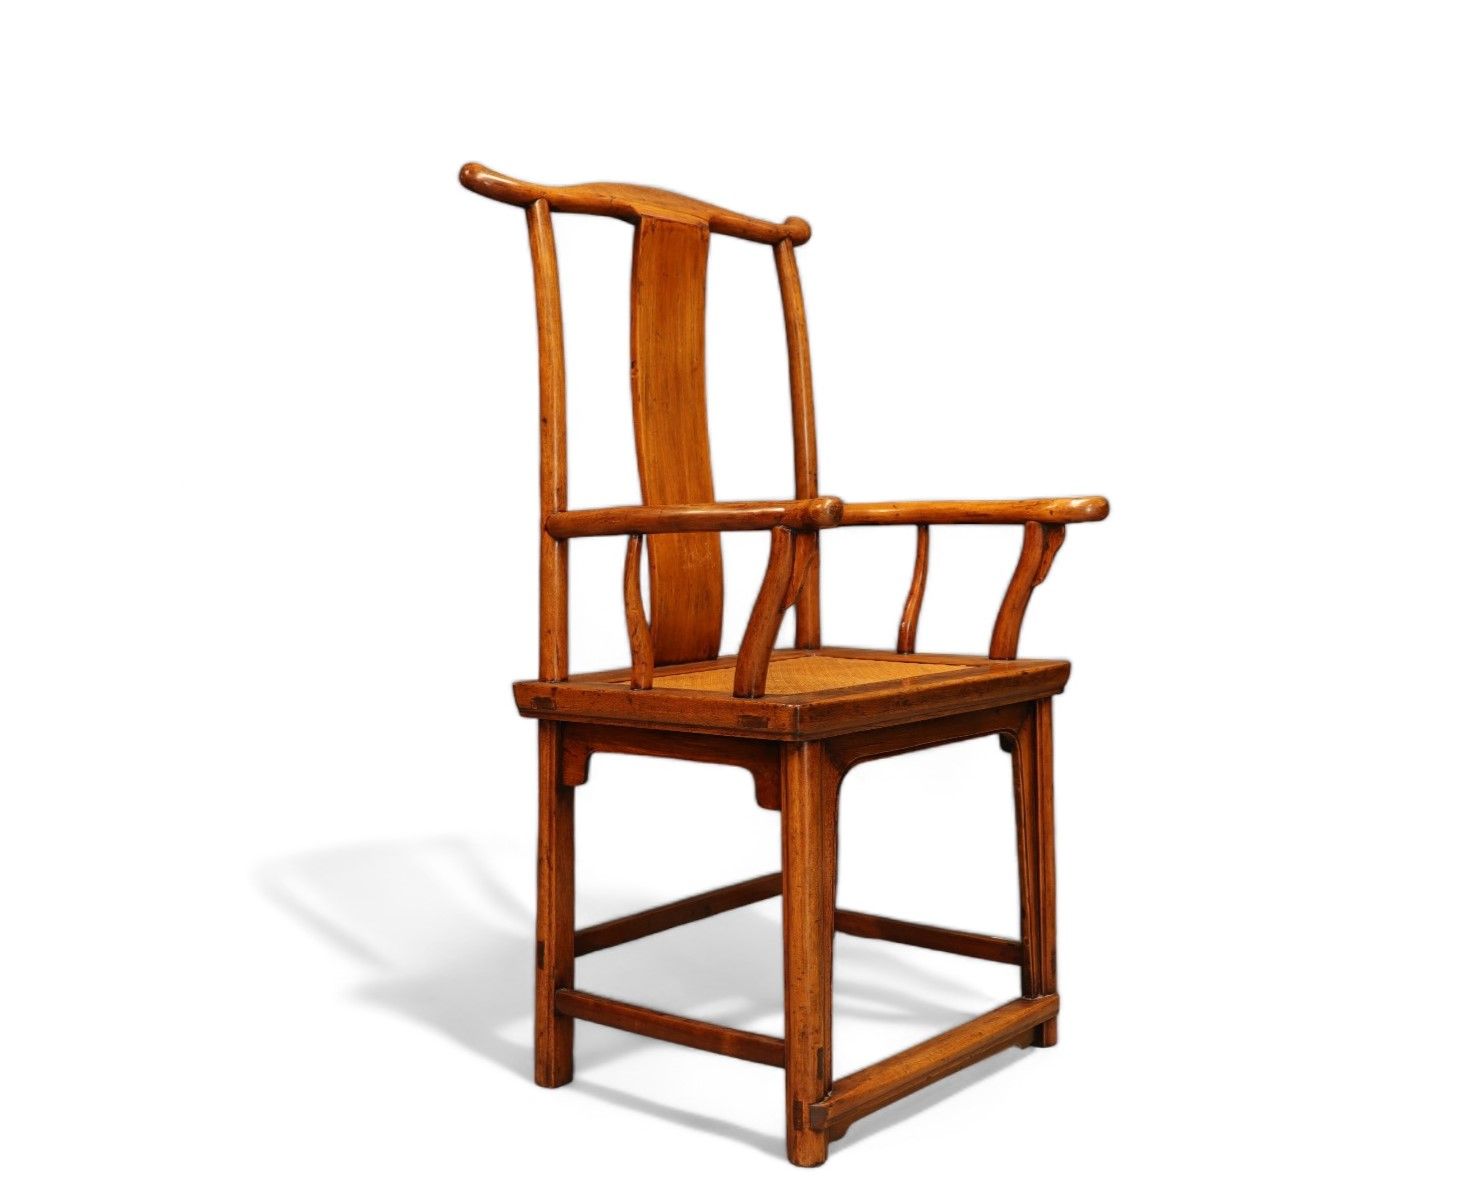 Null 中国 - 清朝，异国情调的木制贵族椅，有杖座。
重量: 15.00 kg
无法送货
区域: Chine
尺寸: H 1180MM X L 650MM
&hellip;